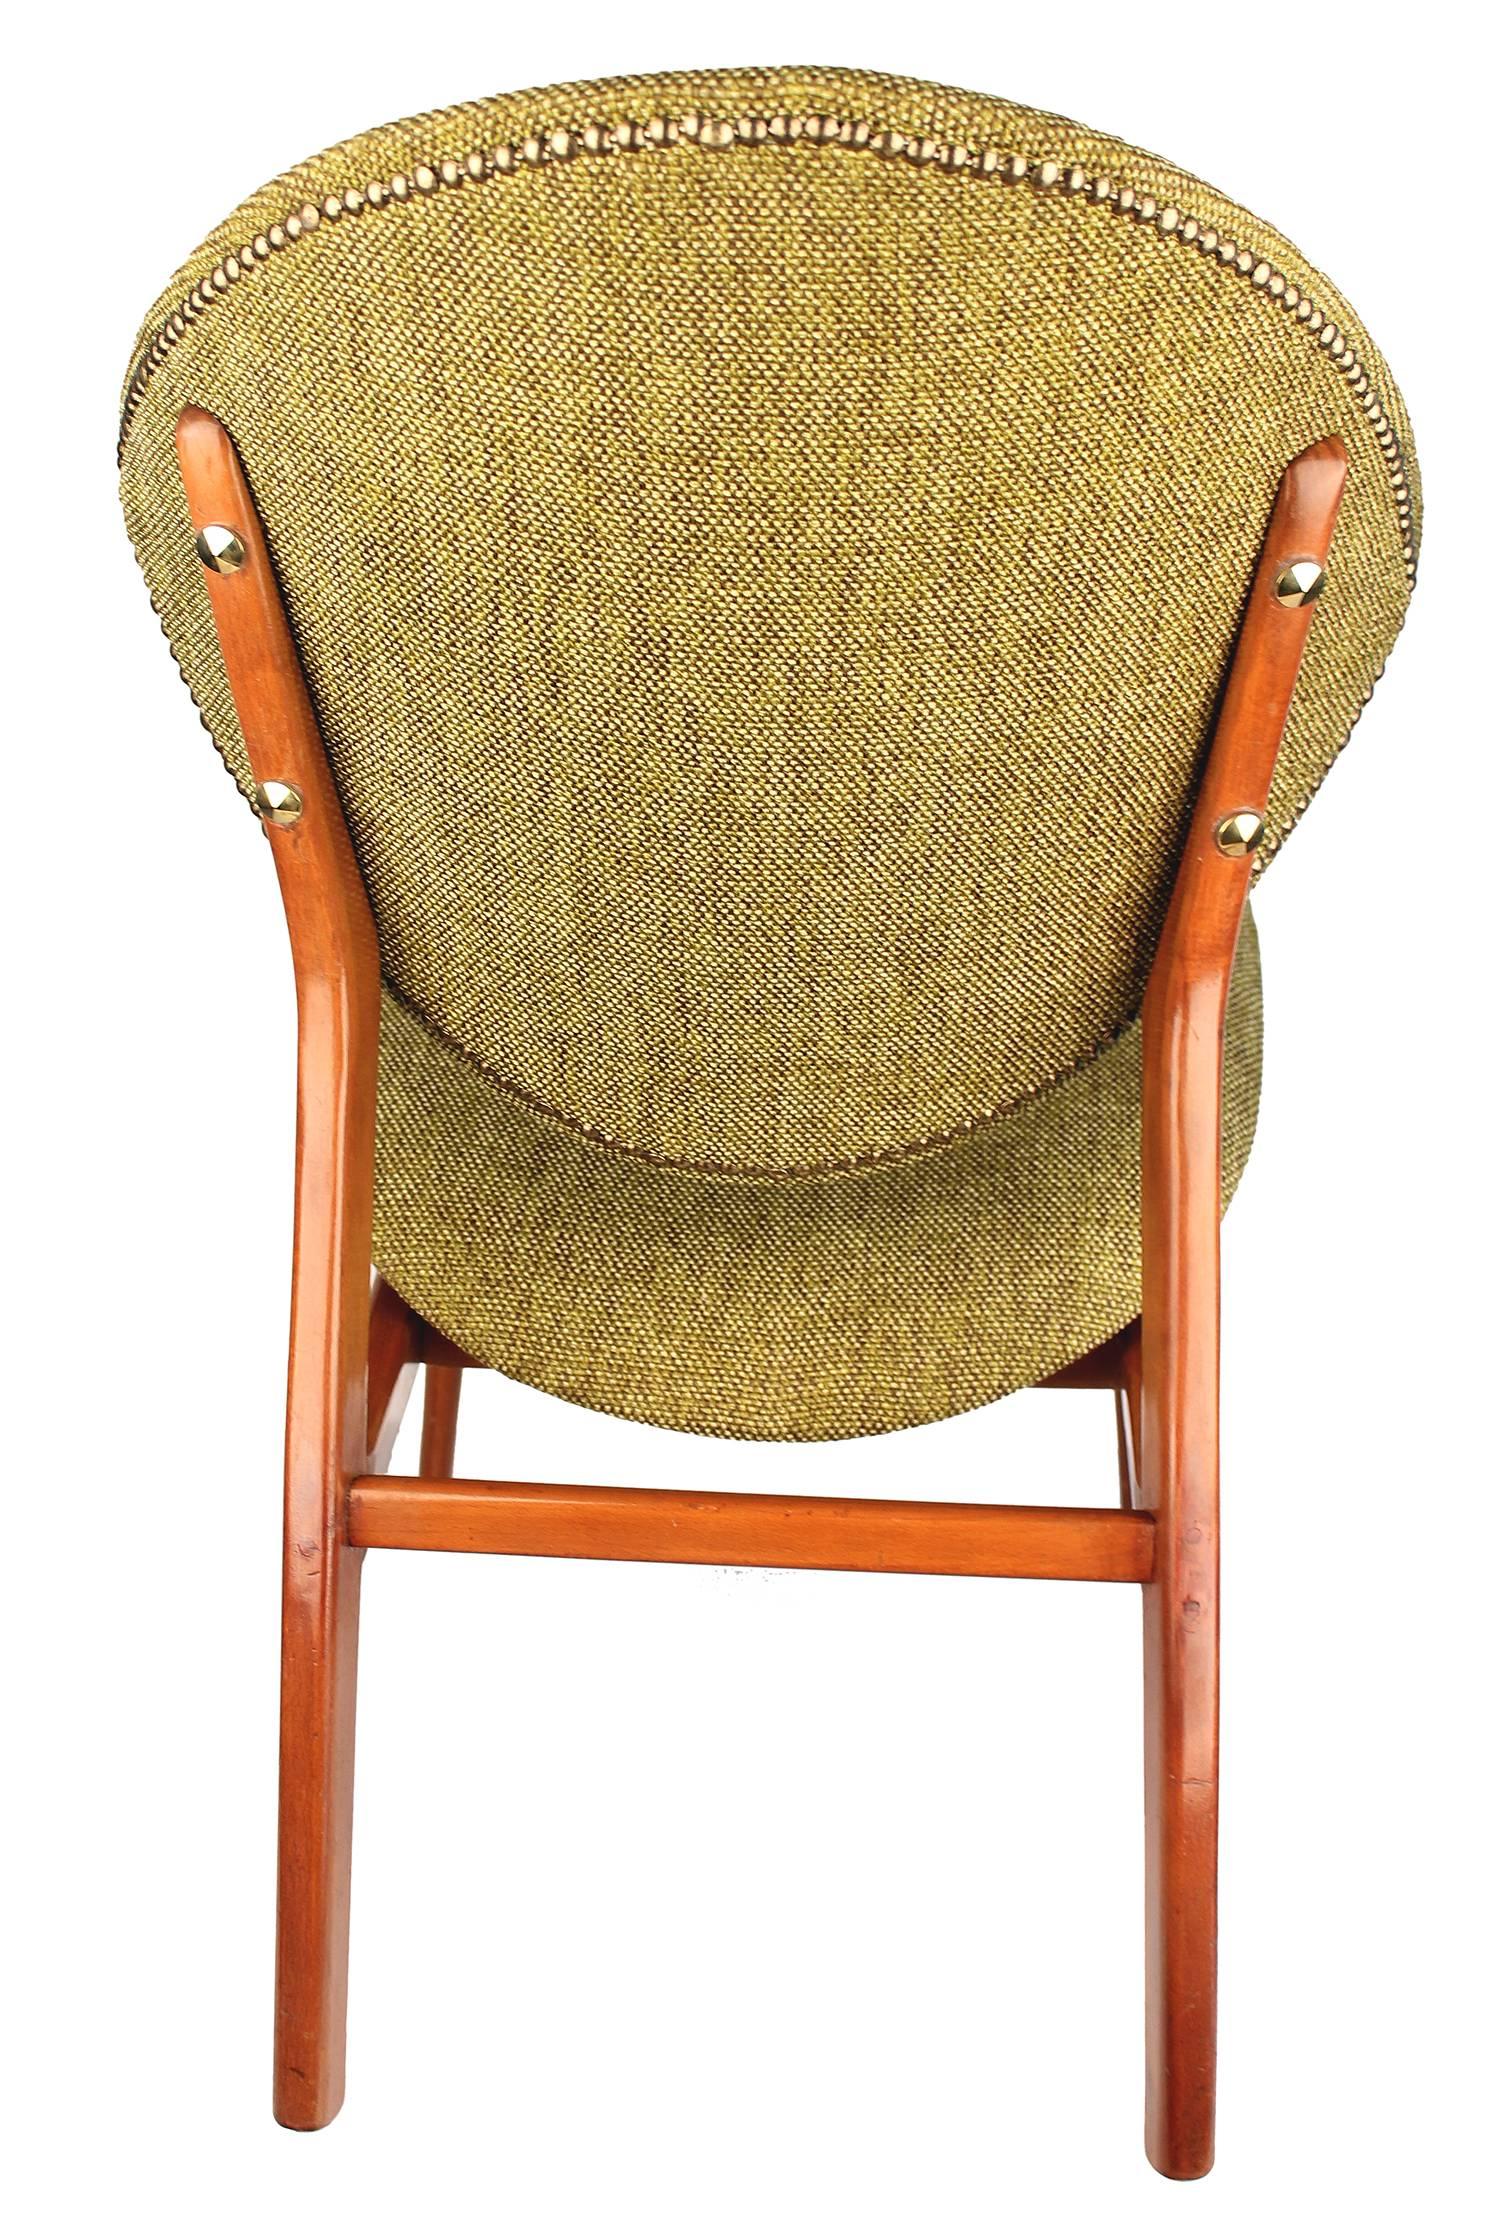 Wool Pair of Sculptural Danish Modern Lounge Chairs - Juhl Jalk Era